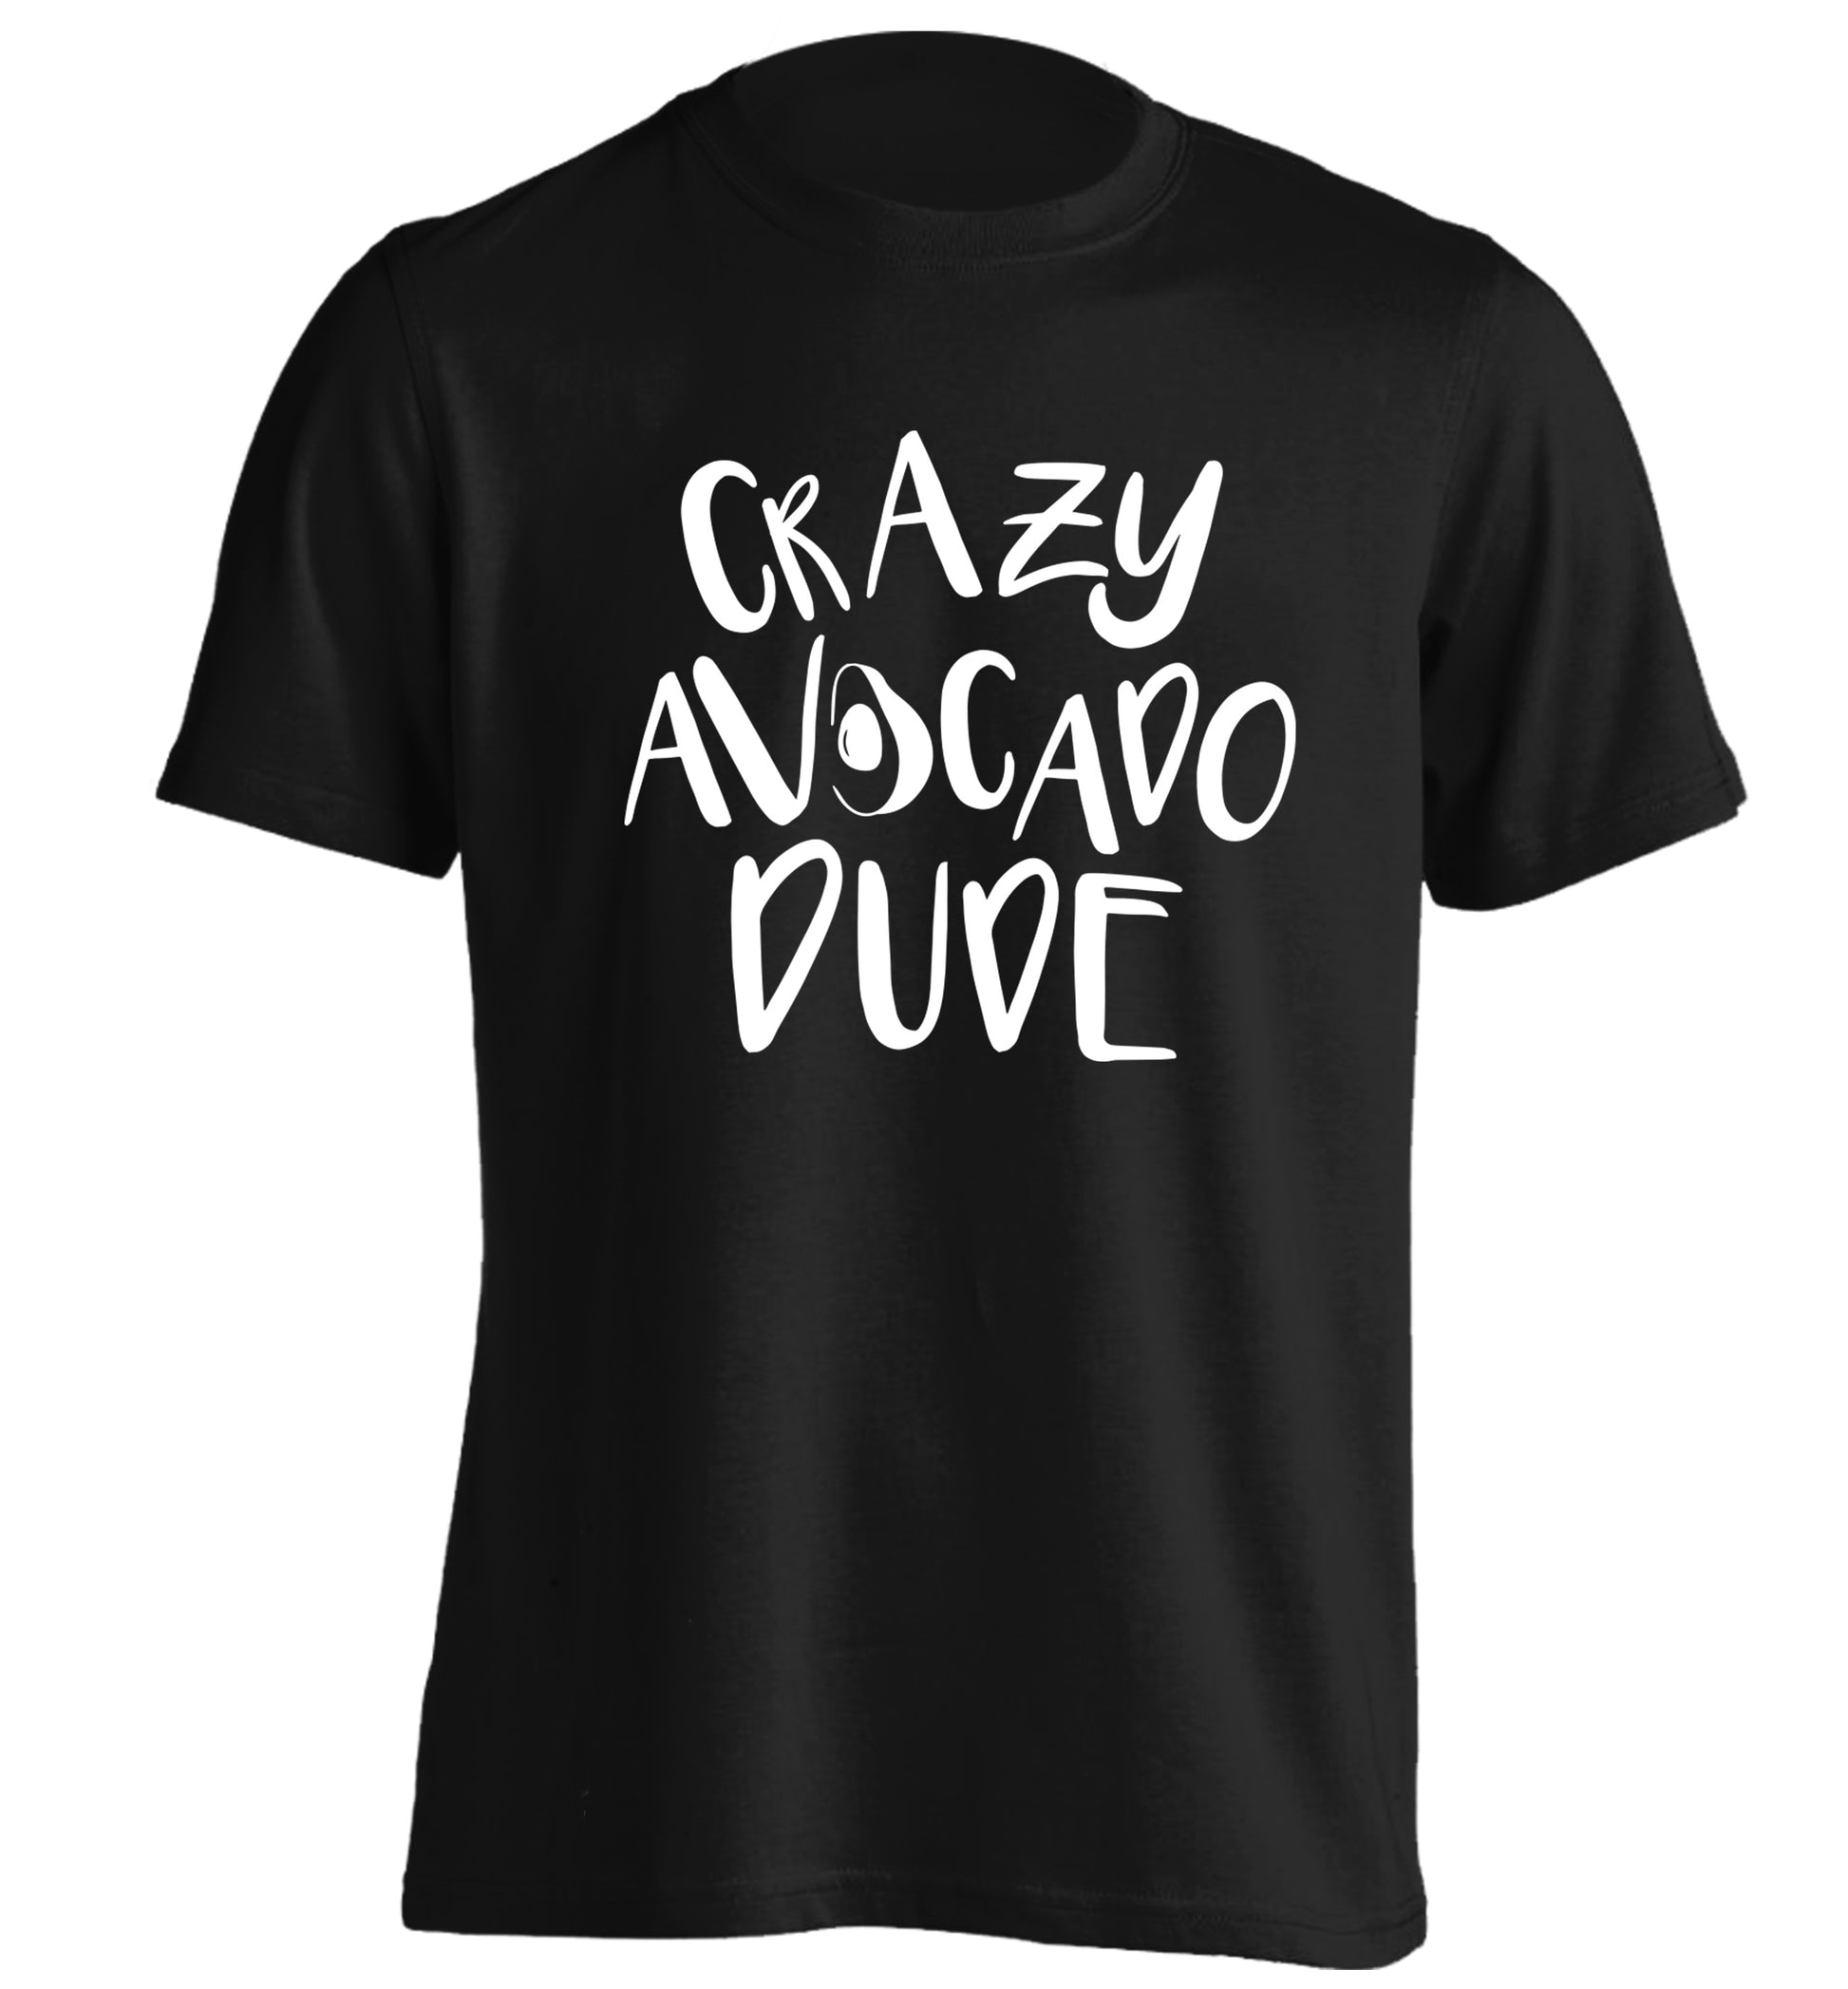 Crazy avocado dude adults unisex black Tshirt 2XL